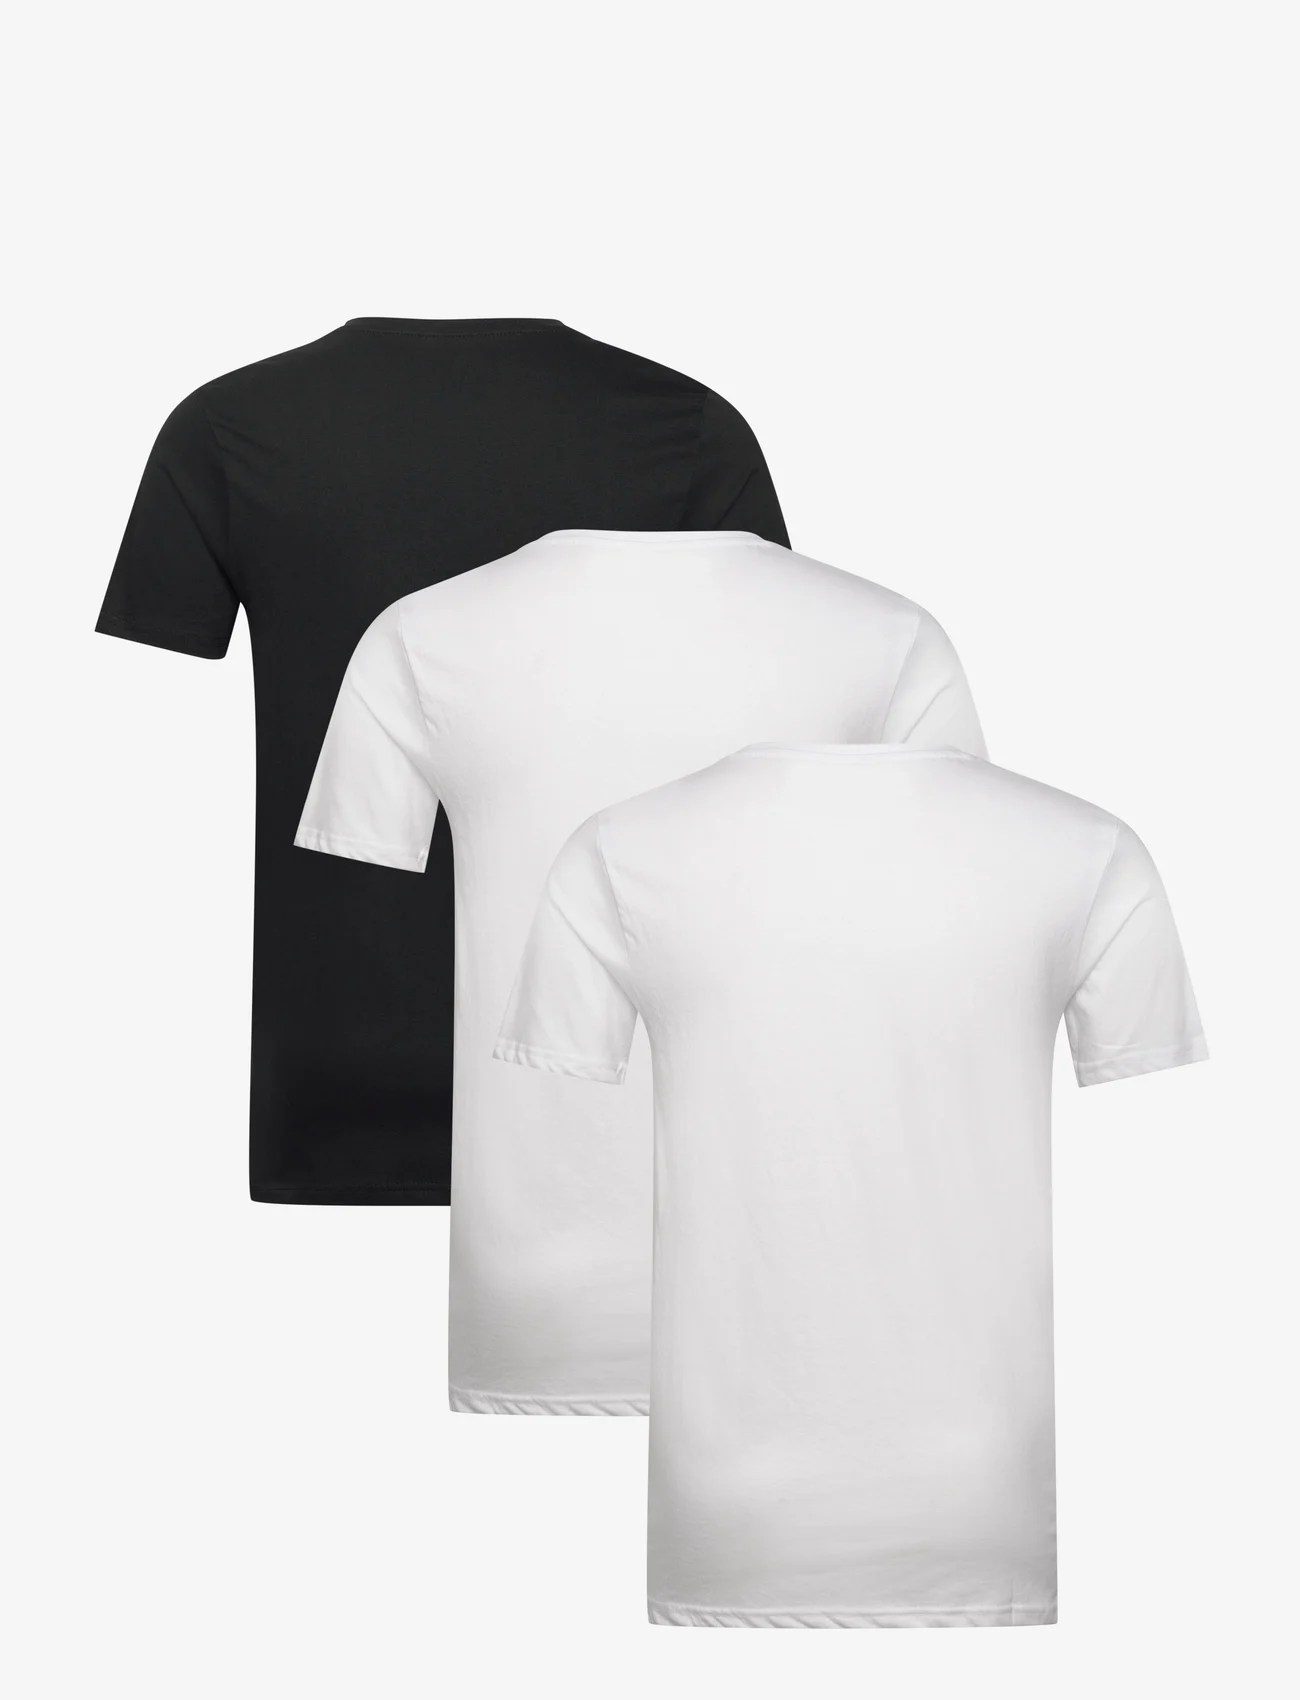 Denim project - 3 PACK T-SHIRTS - mažiausios kainos - 2x white 1x black - 1